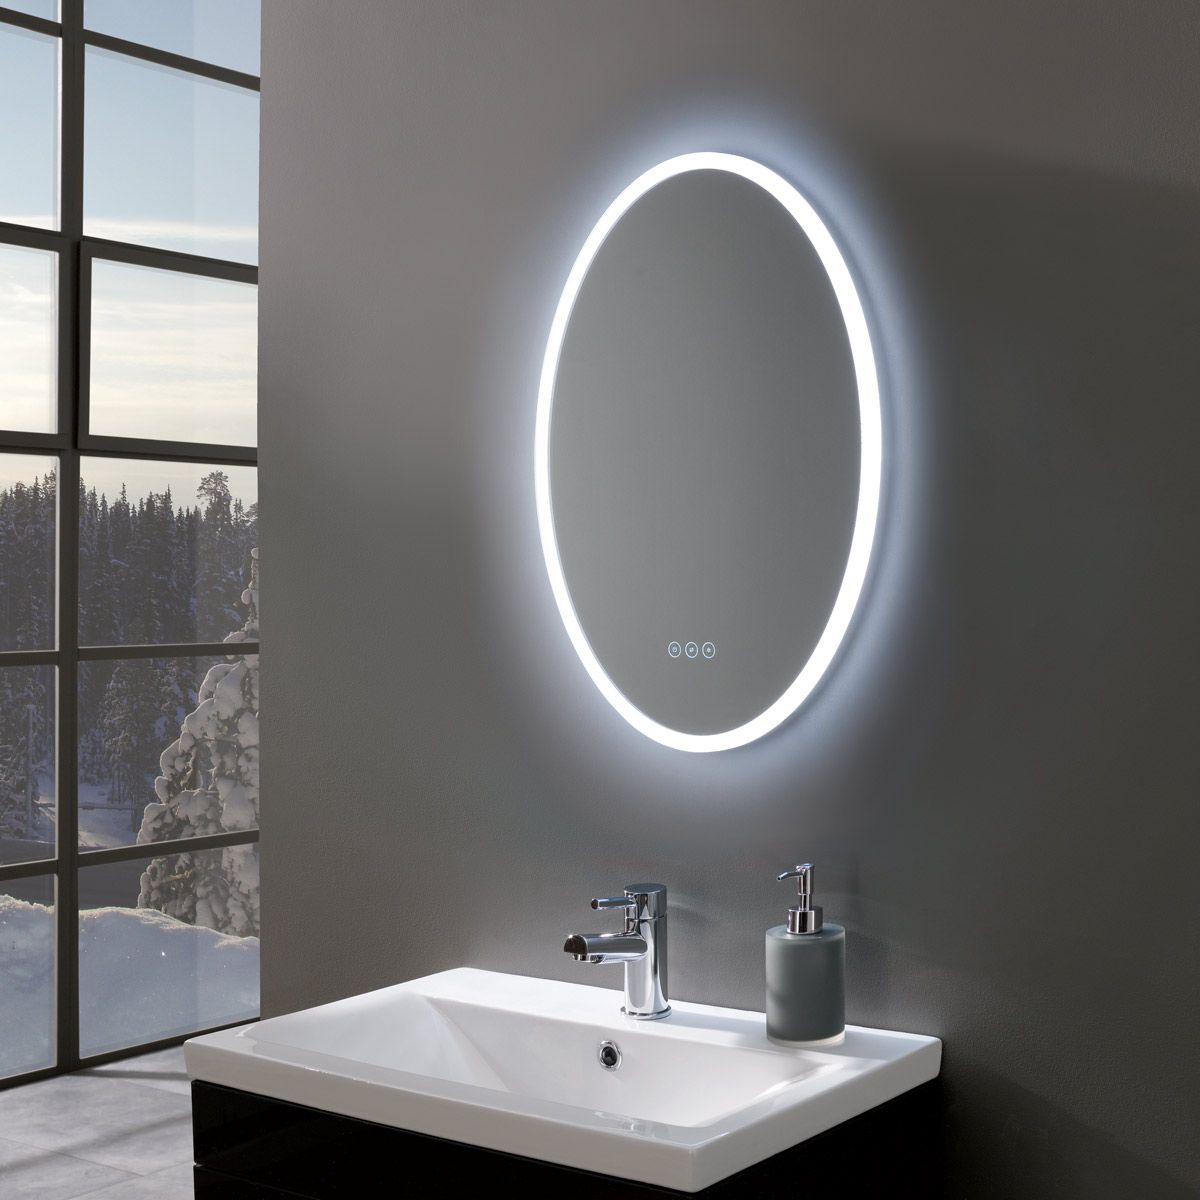 Ultra Slim Led Illuminated Mirror, Bathroom Oval Mirror With Light